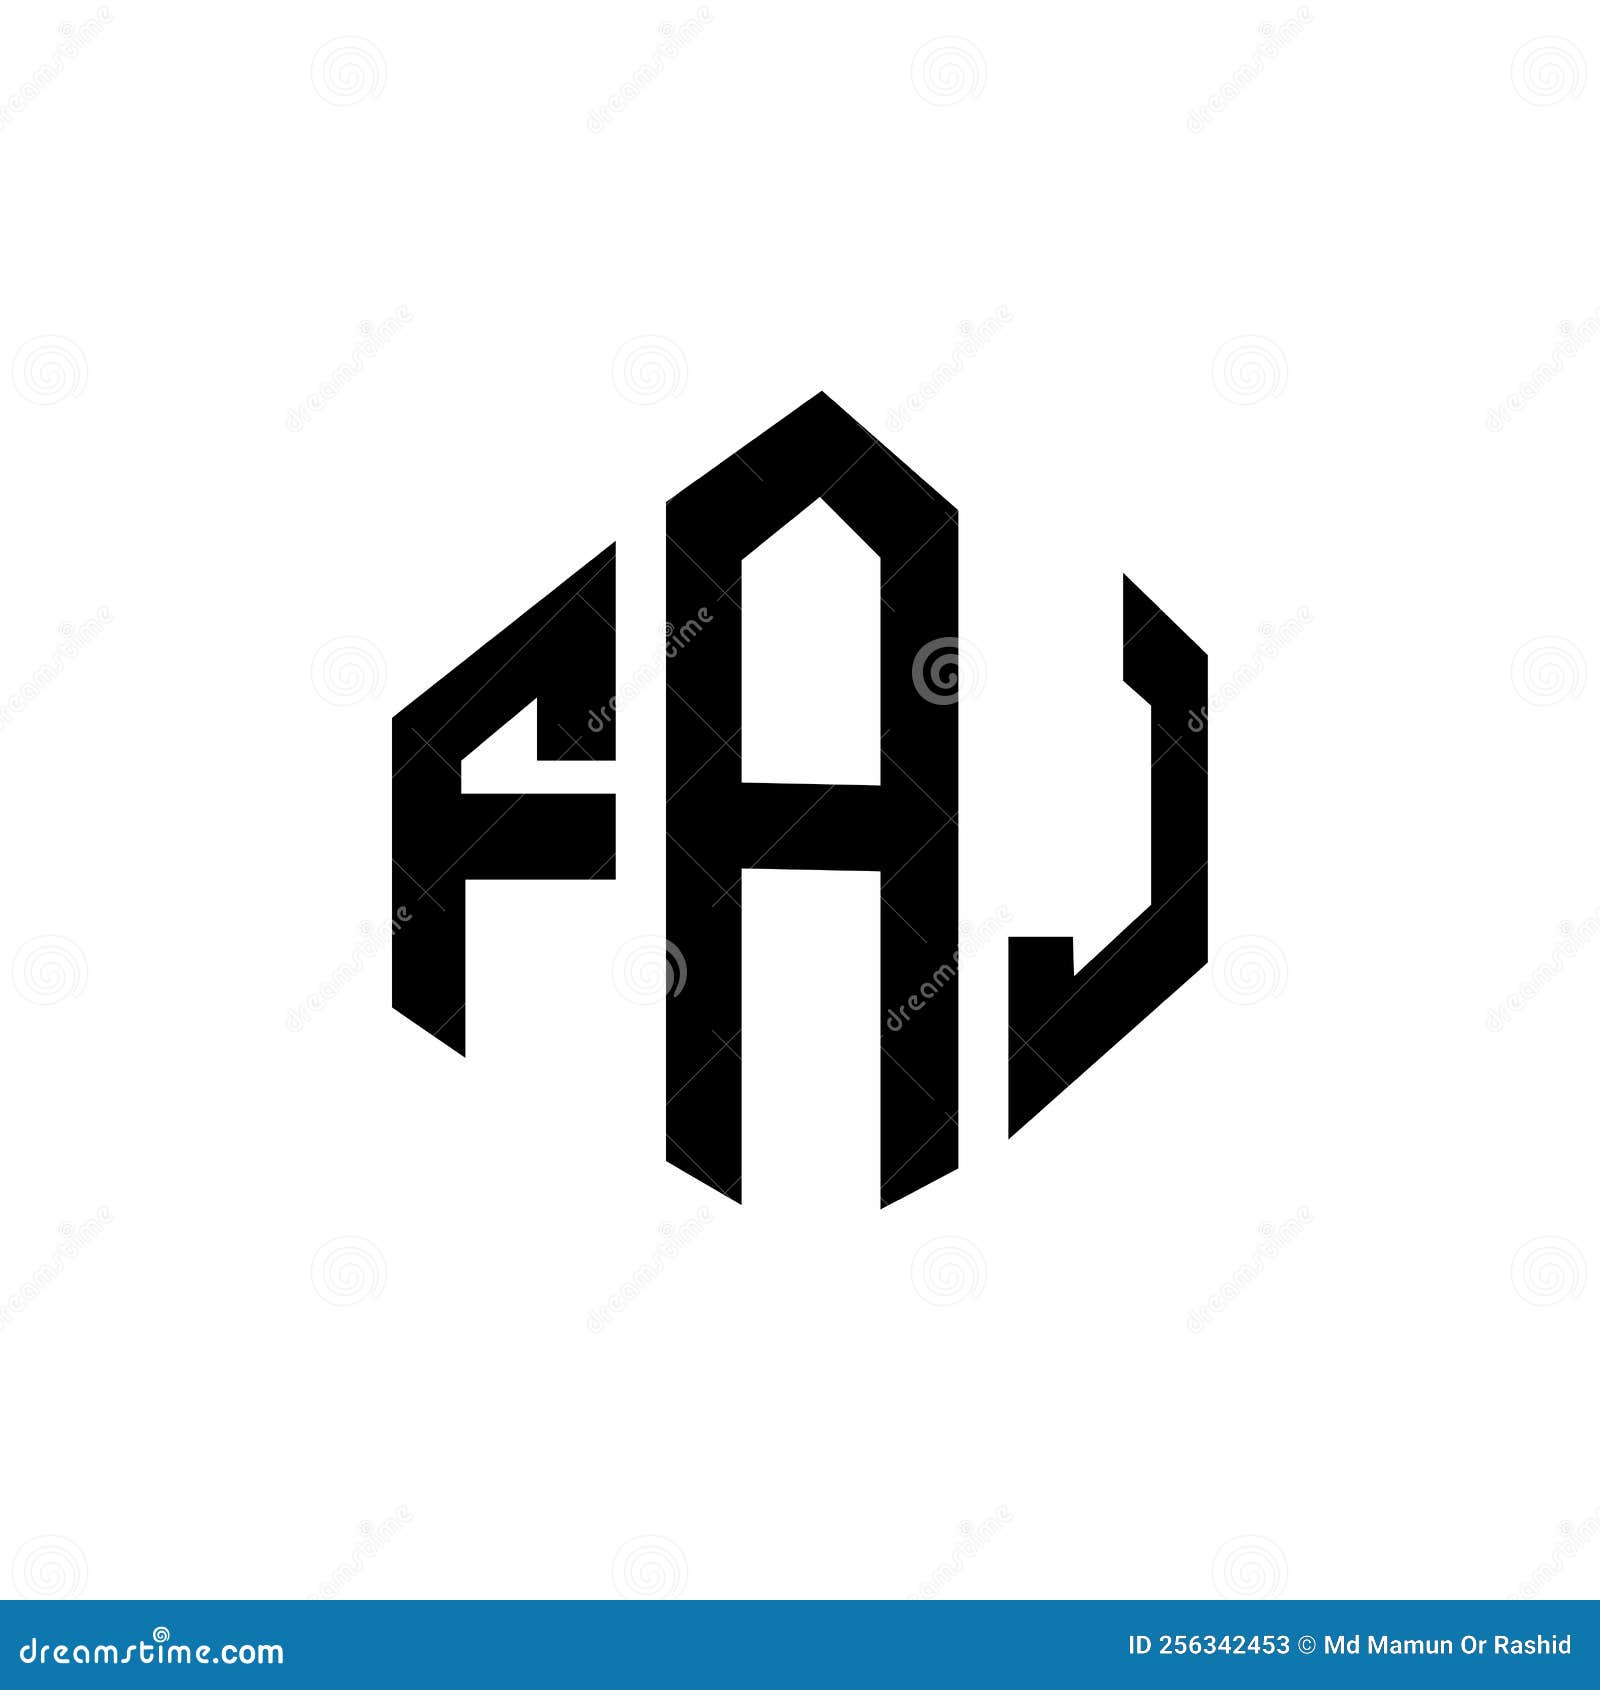 faj letter logo  with polygon . faj polygon and cube  logo . faj hexagon  logo template white and